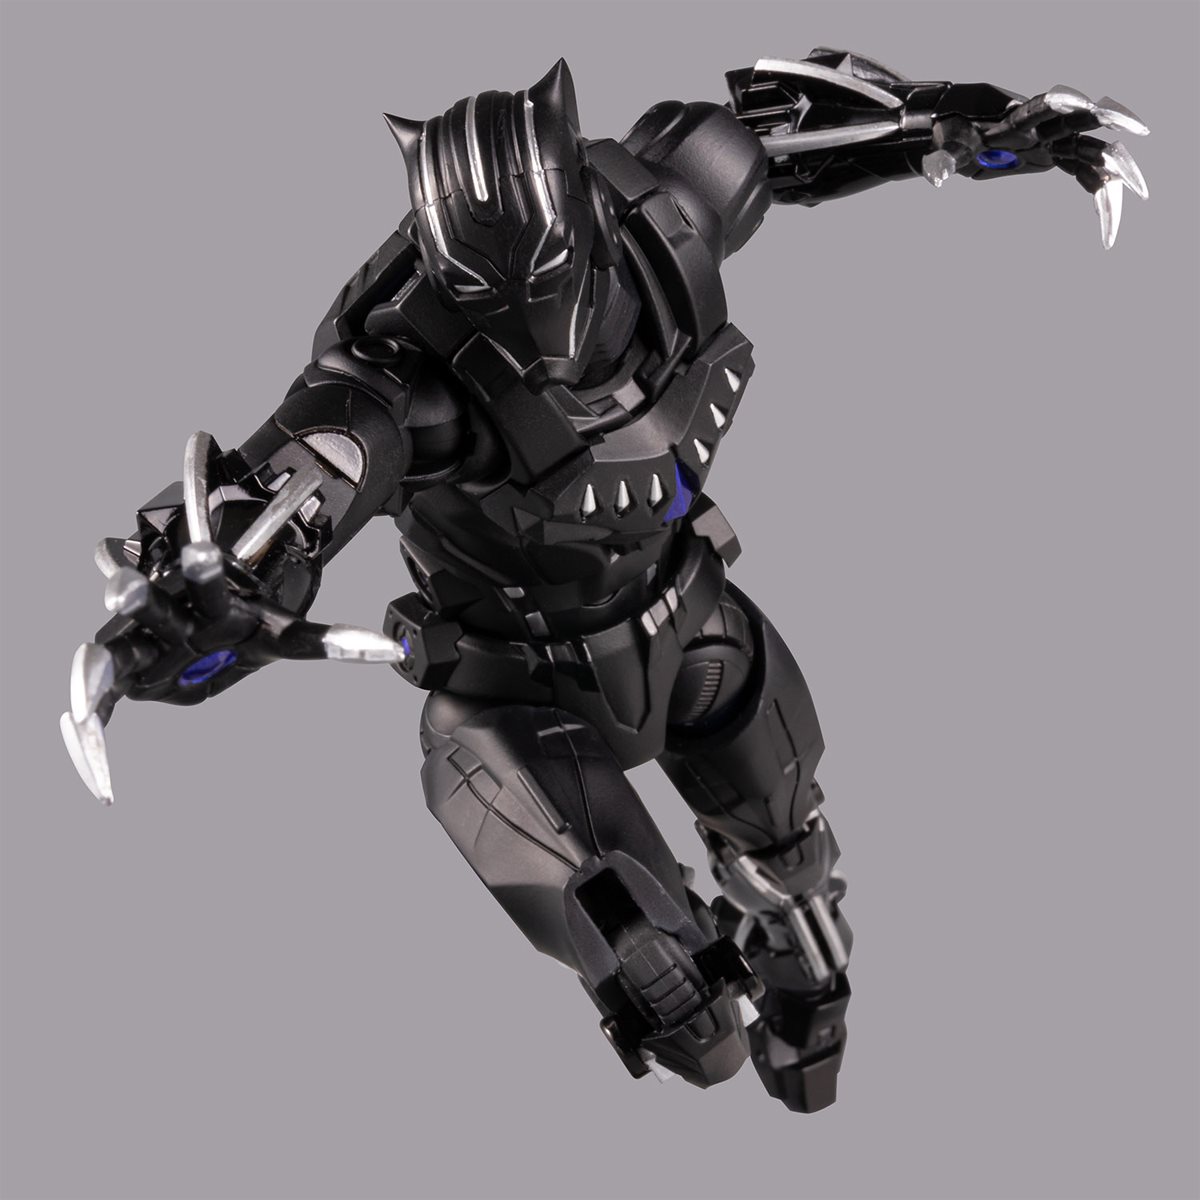 pastor realce Desear Marvel Black Panther Fighting Armor Action Figure